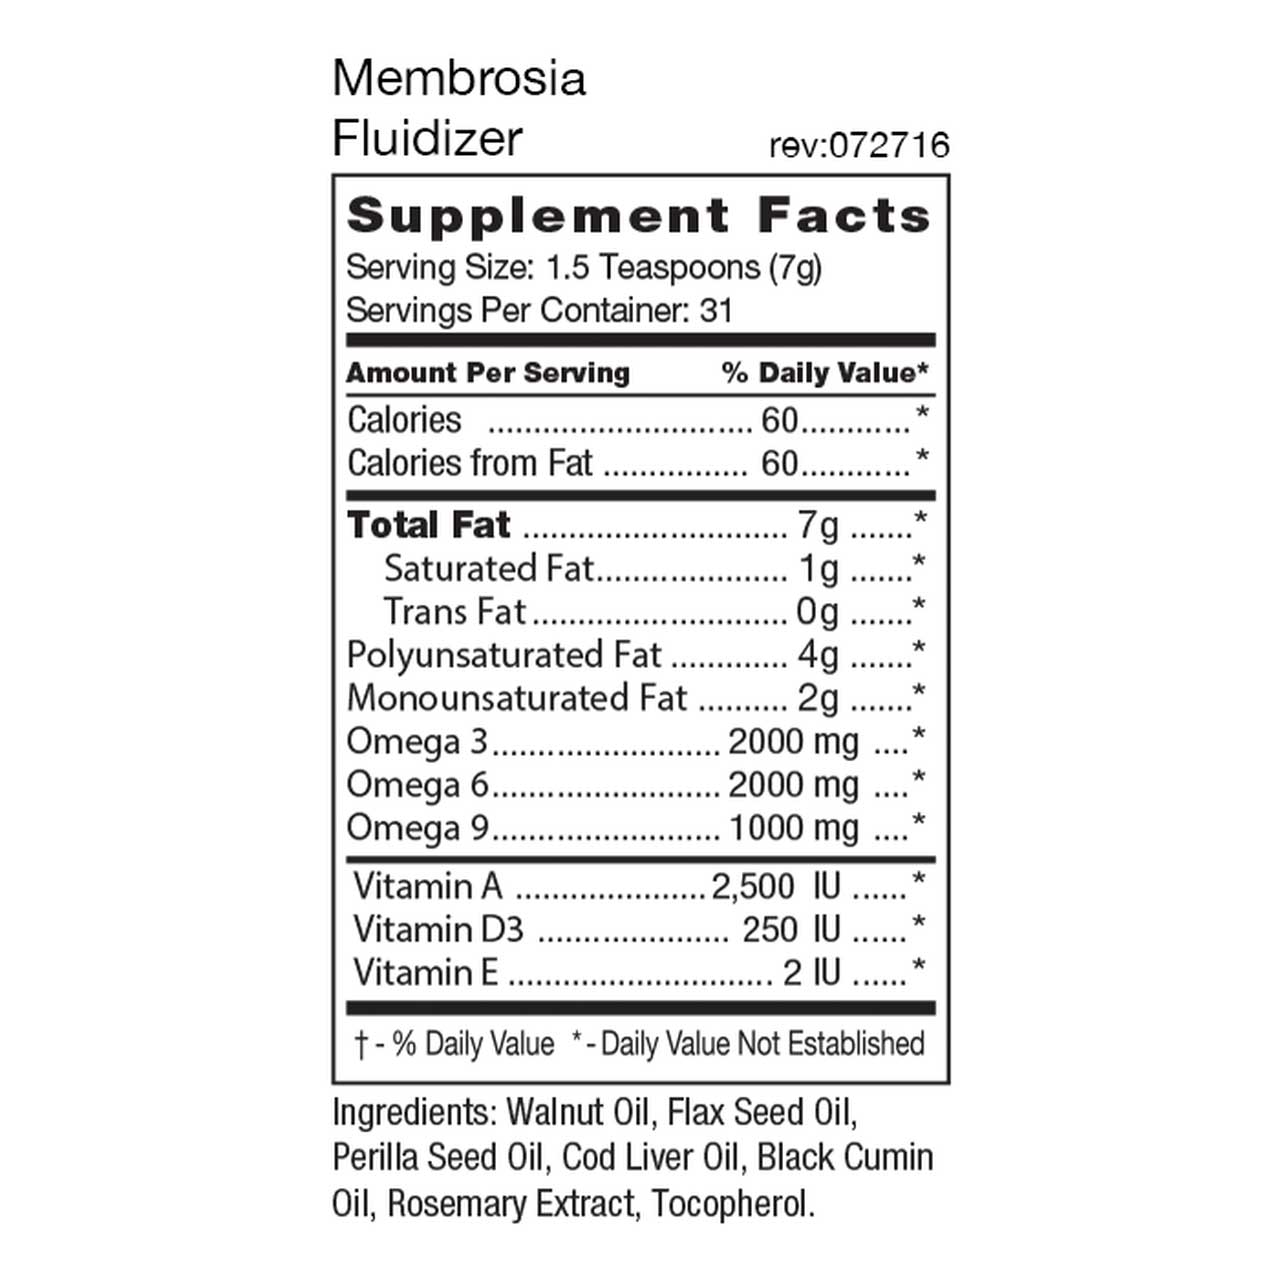 D'Adamo Personalized Nutrition Membrosia Fluidizer Ingredients